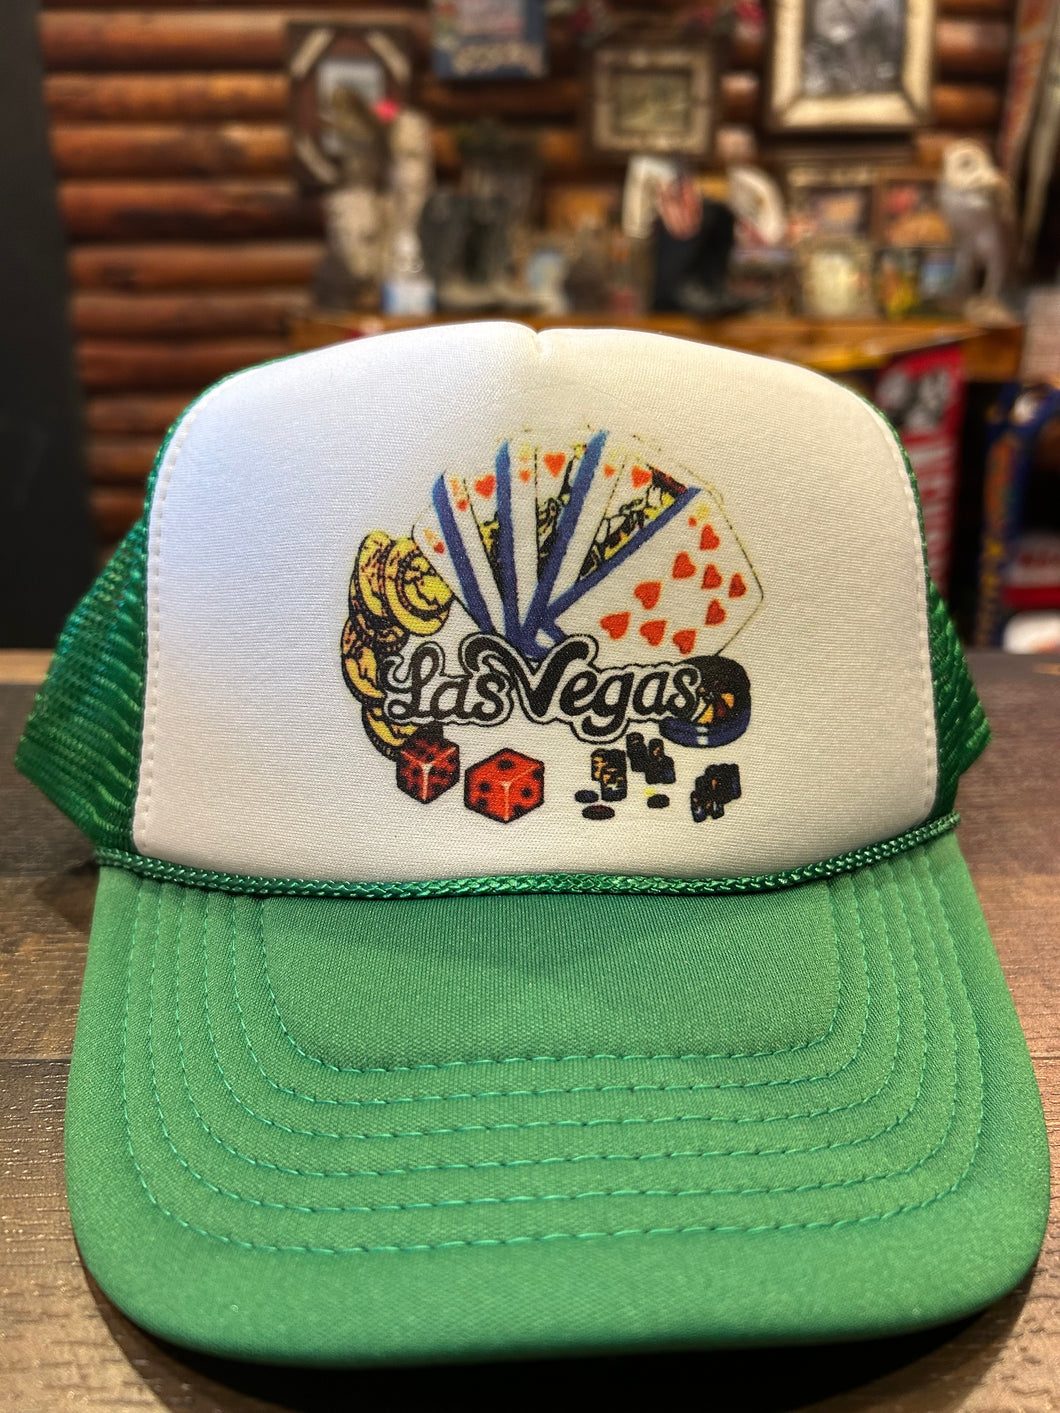 New Las Vegas Green & White Hat